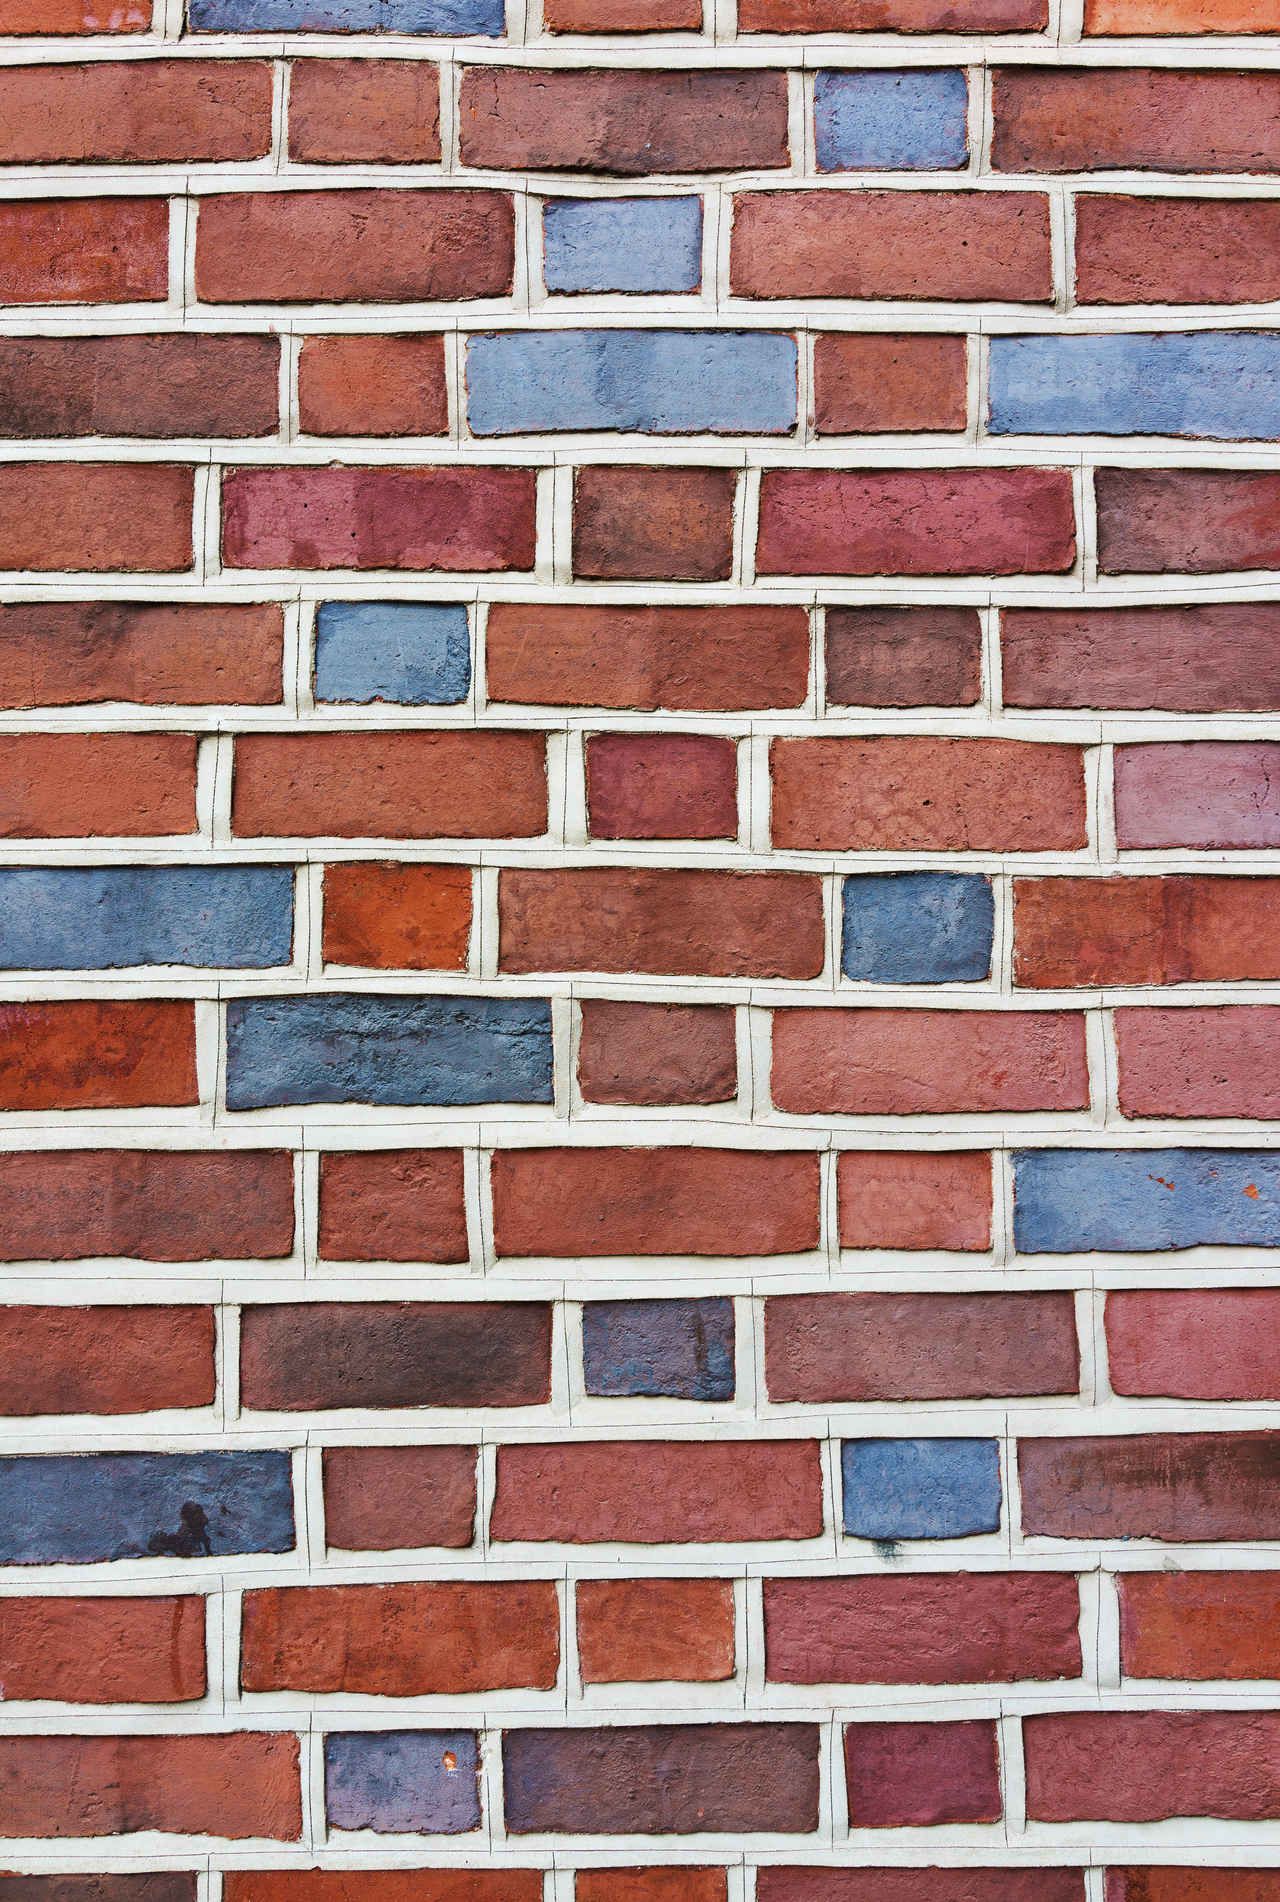 Blue Brick Texture Wallpapers